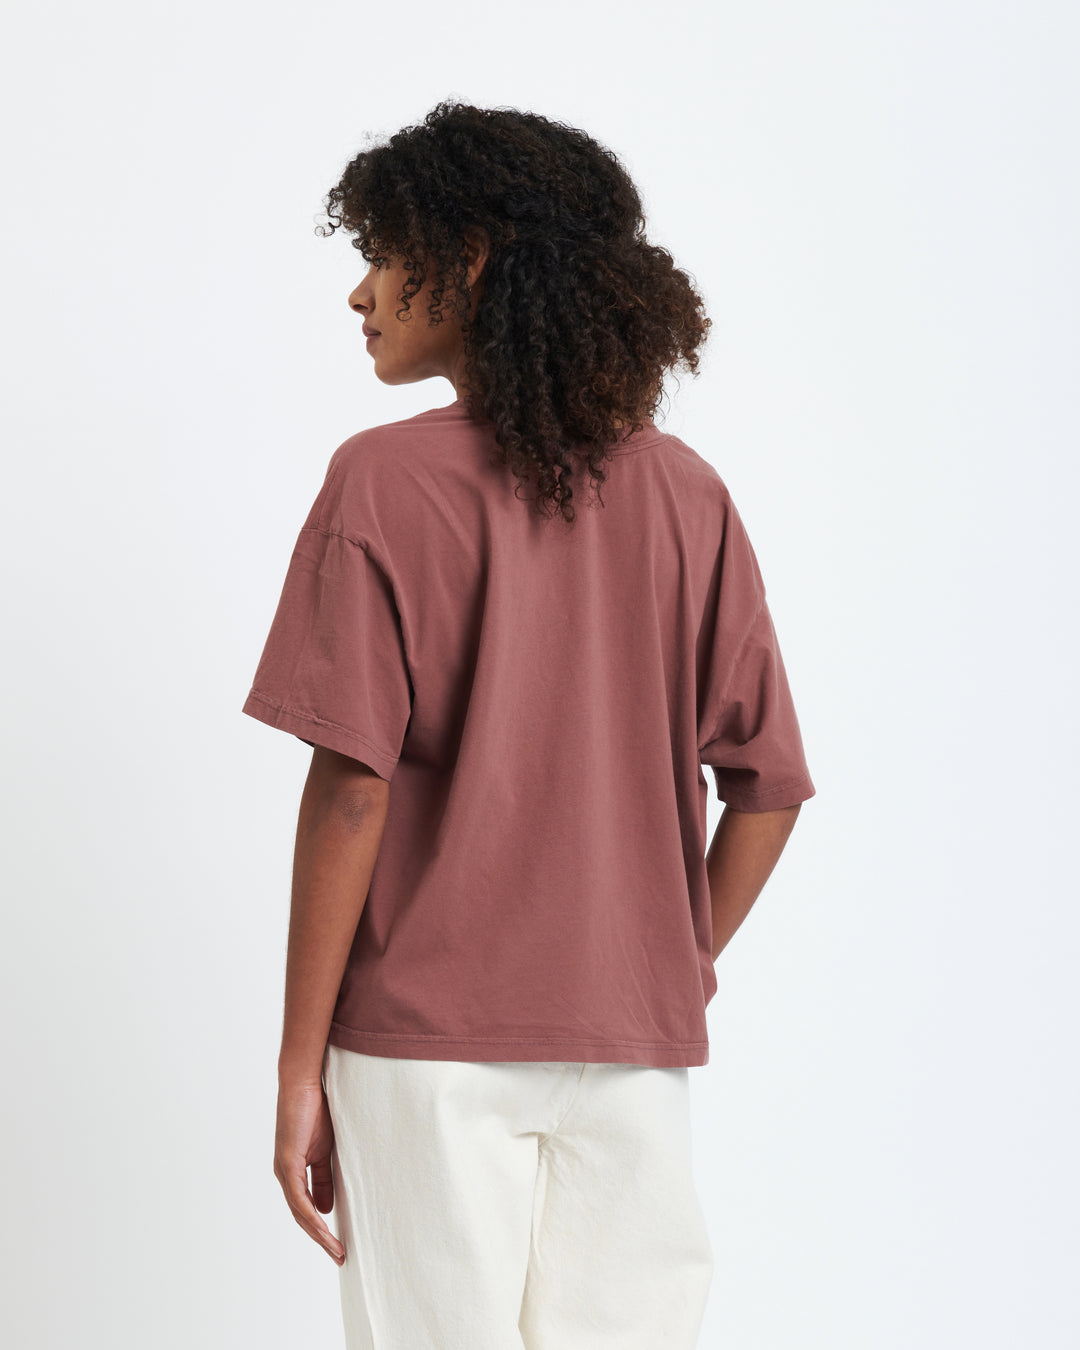 New Optimist womenswear V-neck garment dyed T-shirt T-shirt